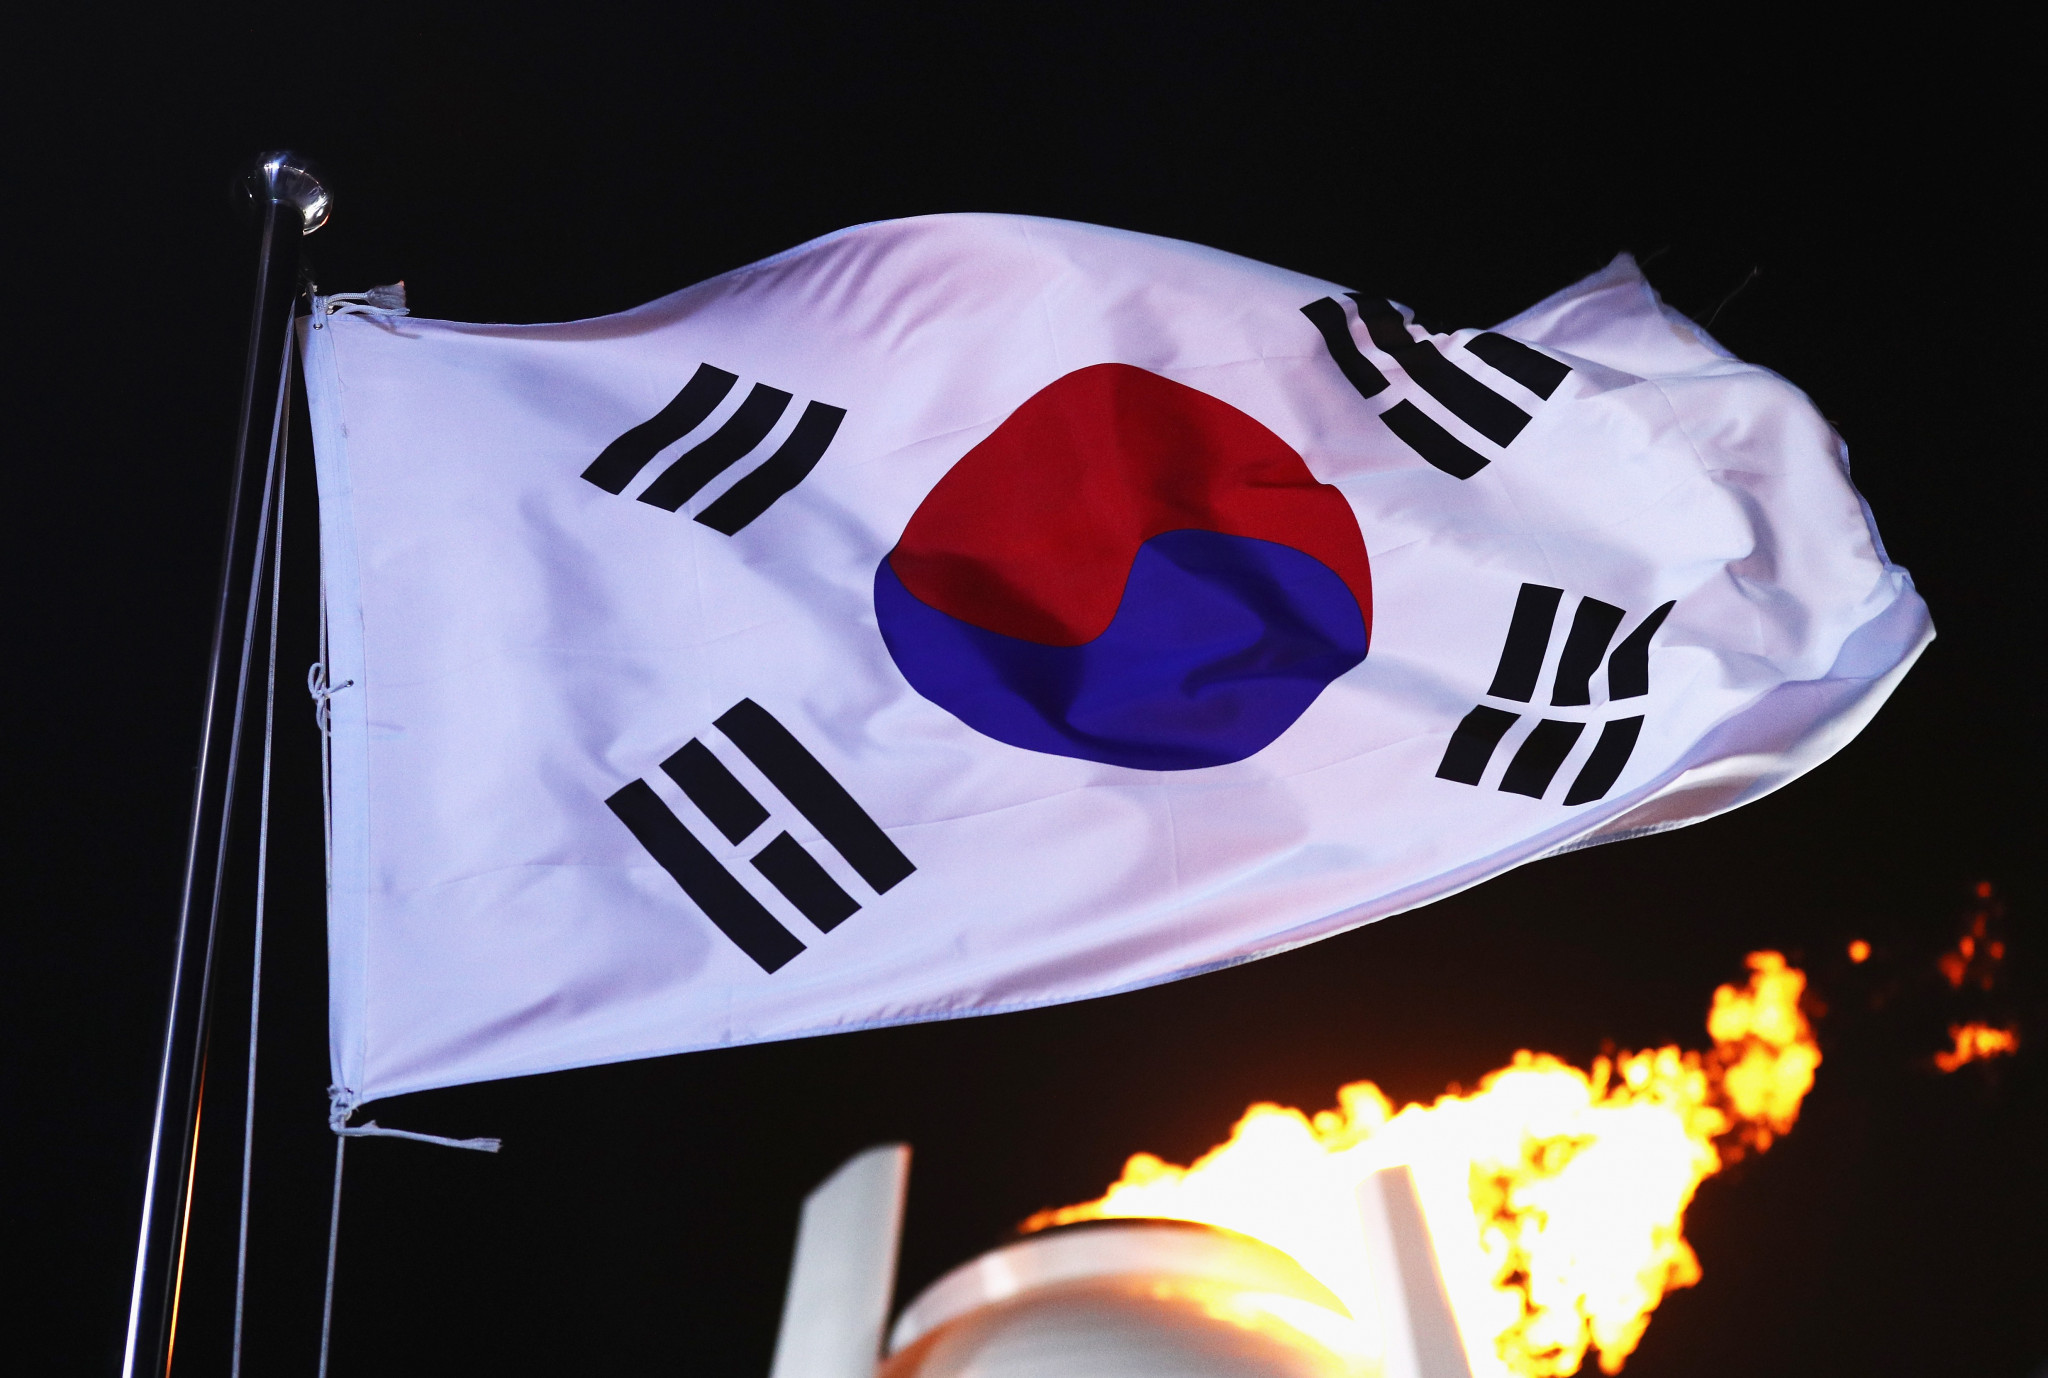 South Korean NOC wants OCA clarification over Russian involvement at Asian Games